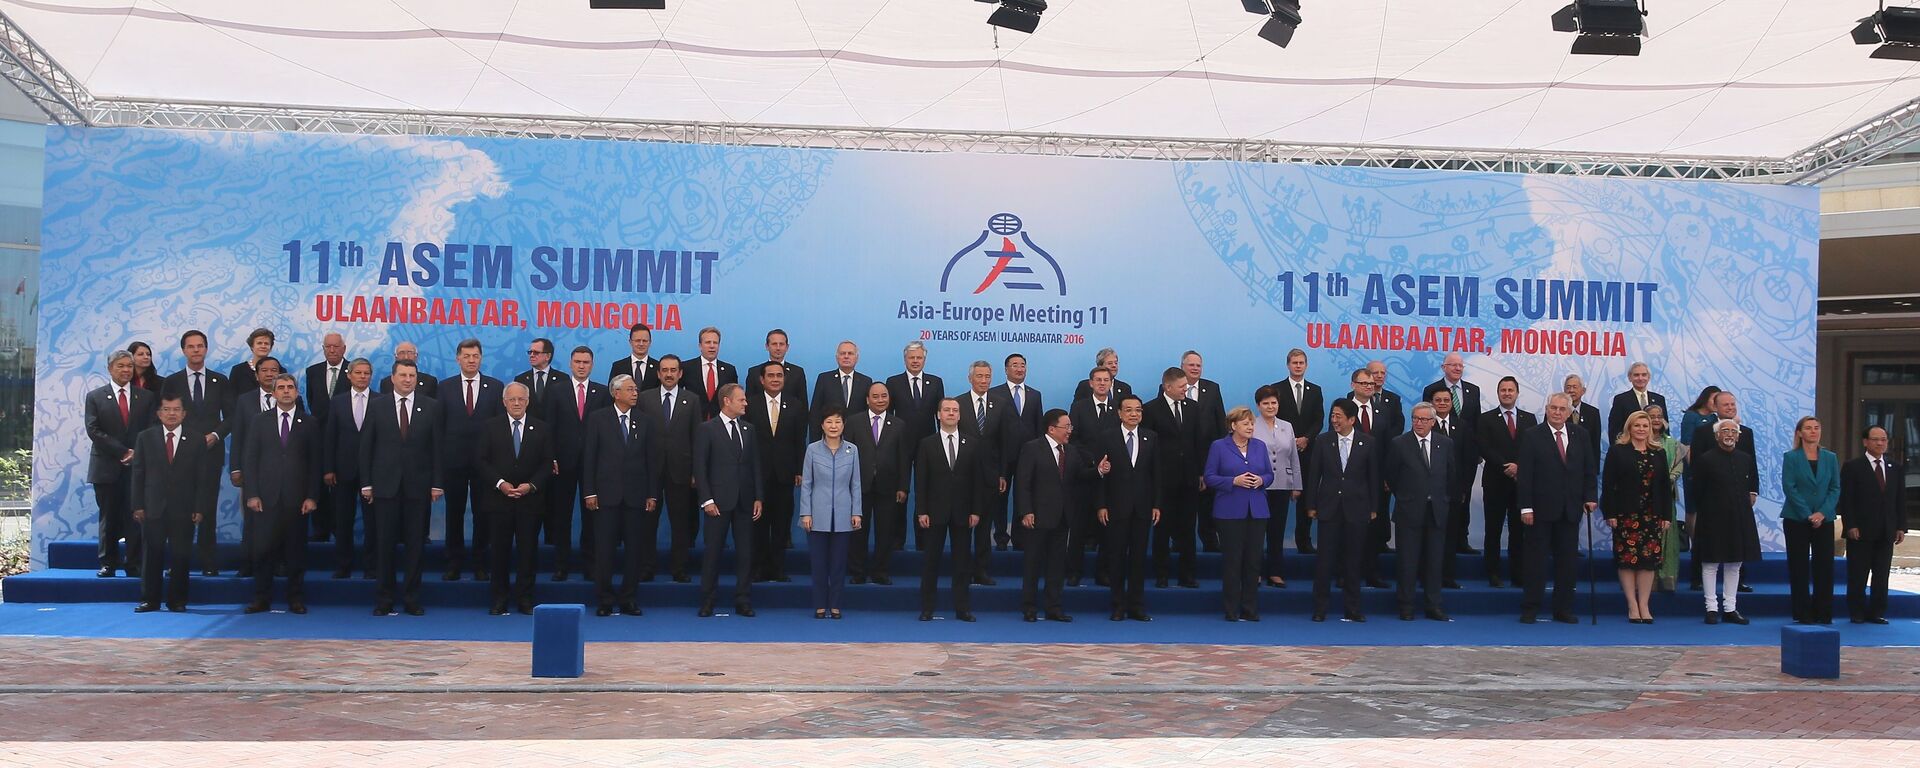 Prime Minister Dmitry Medvedev at the ASEM Summit in Mongolia - Sputnik Việt Nam, 1920, 19.10.2018